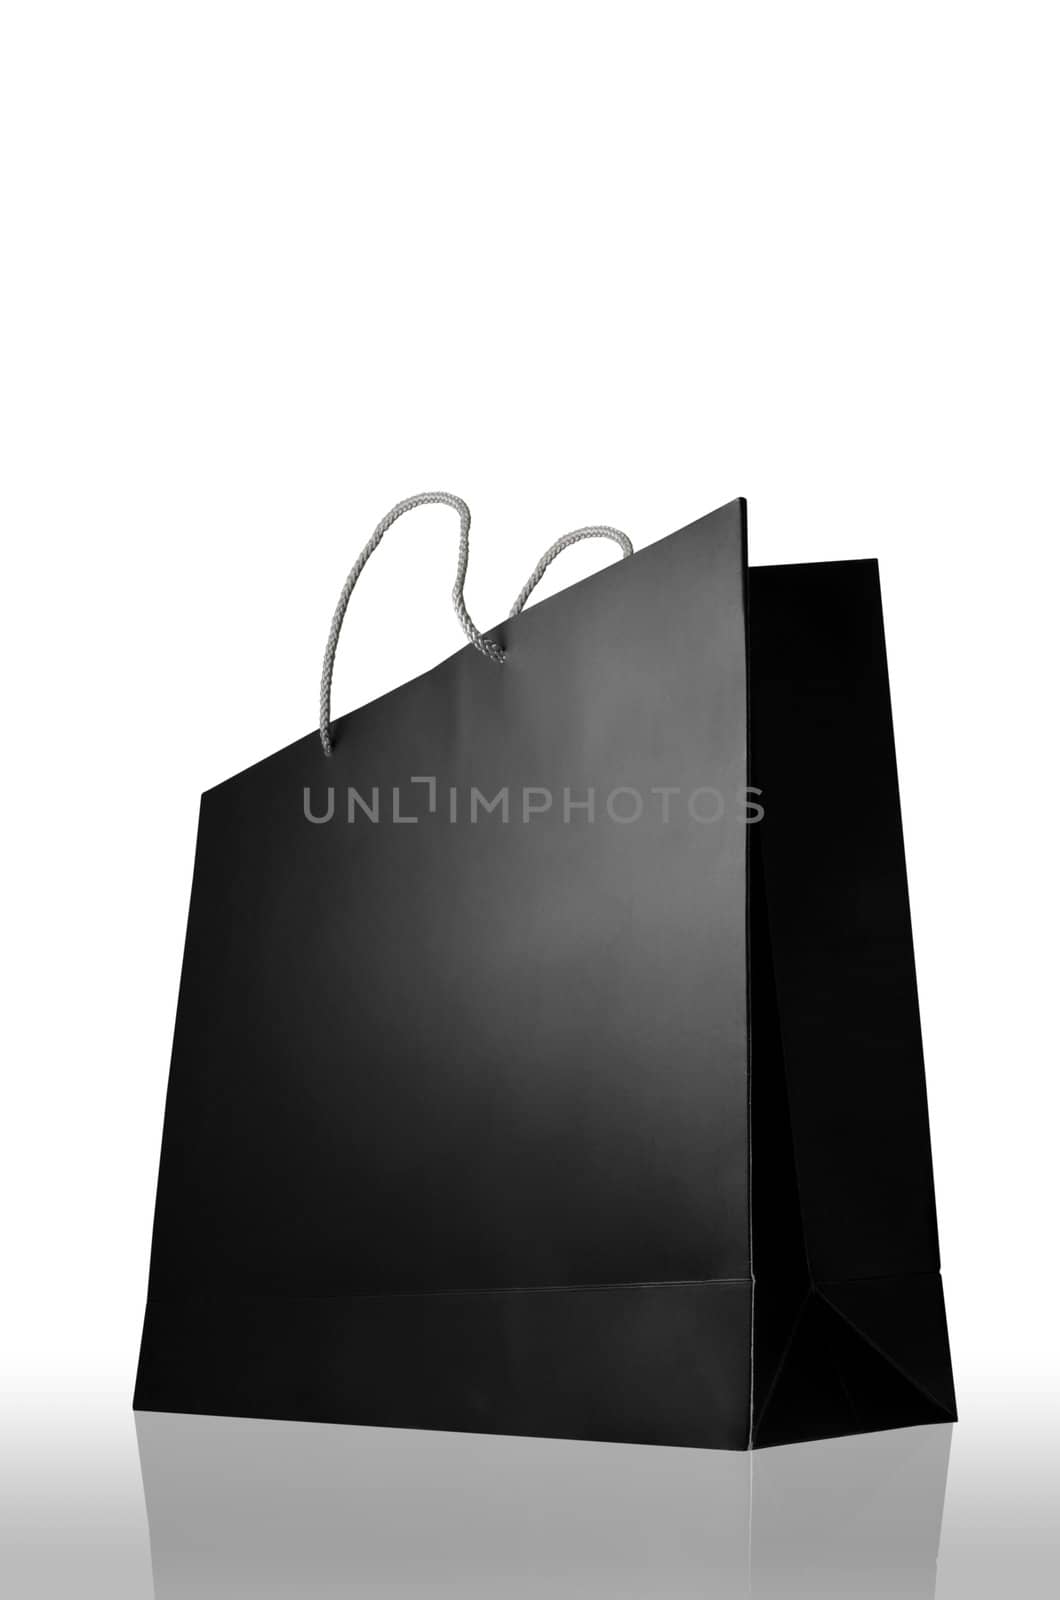 Glaze shopping bag on white background by pixbox77